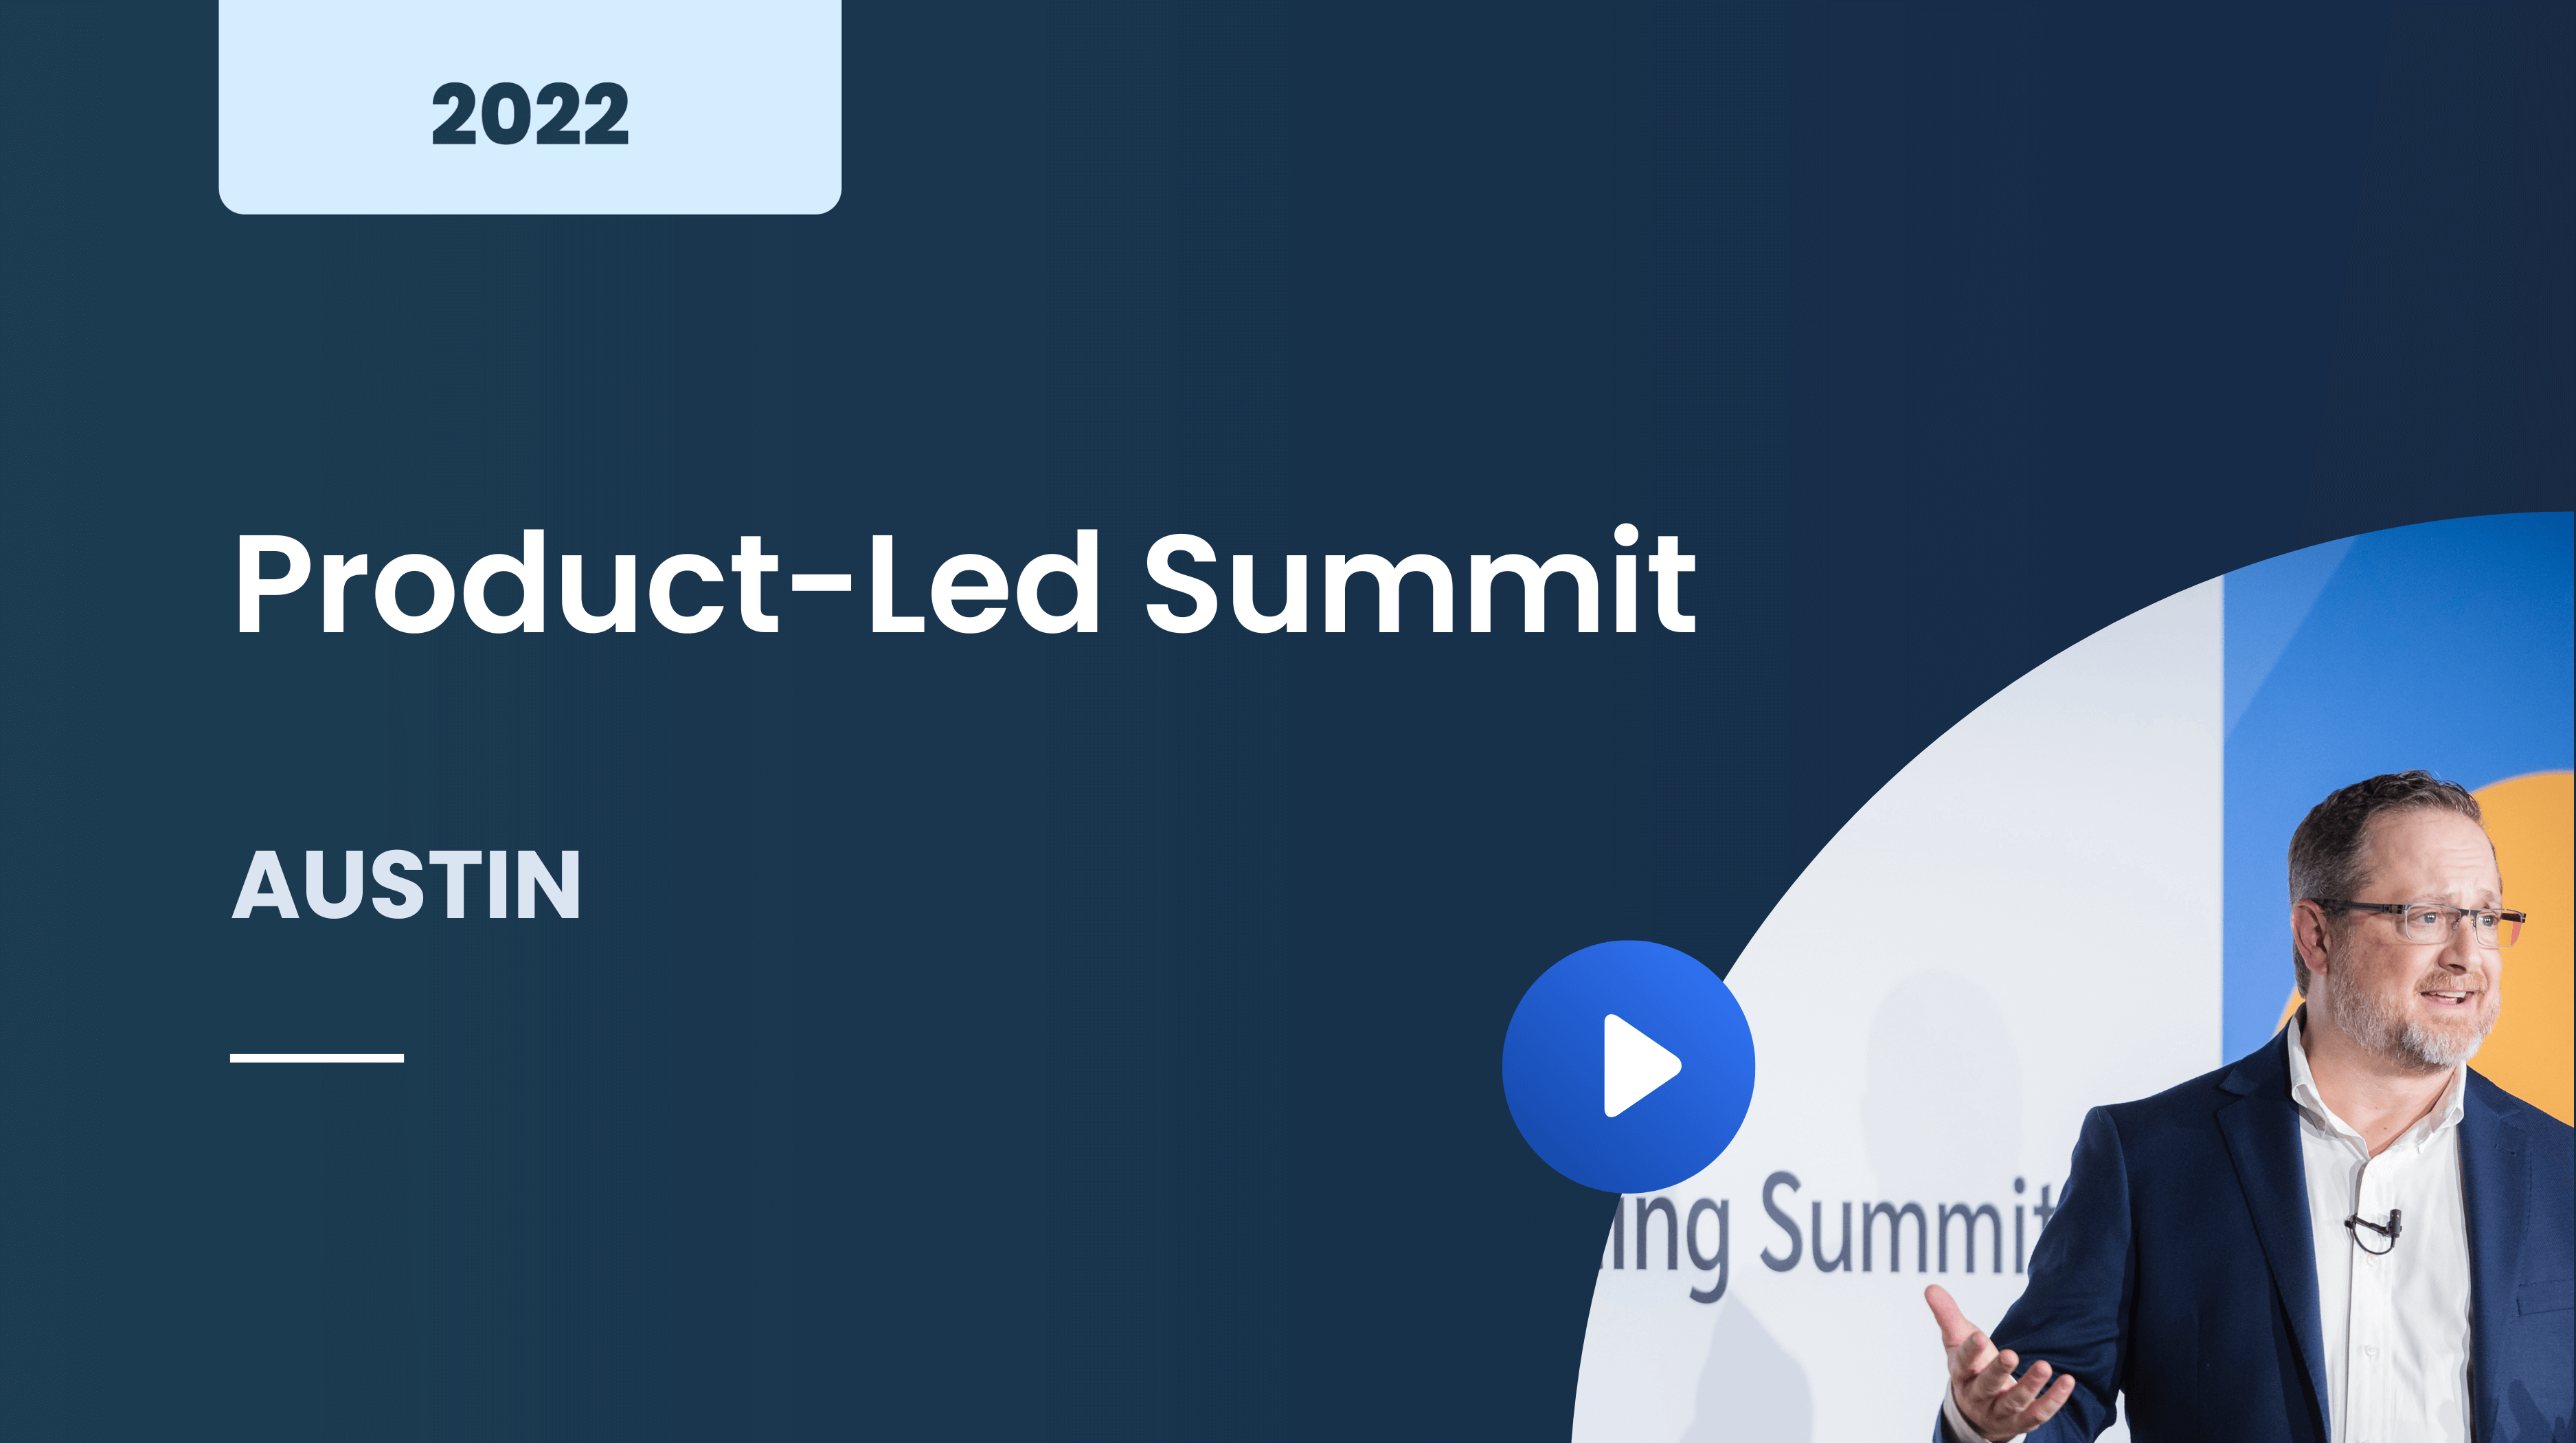 Product-Led Summit Austin 2022